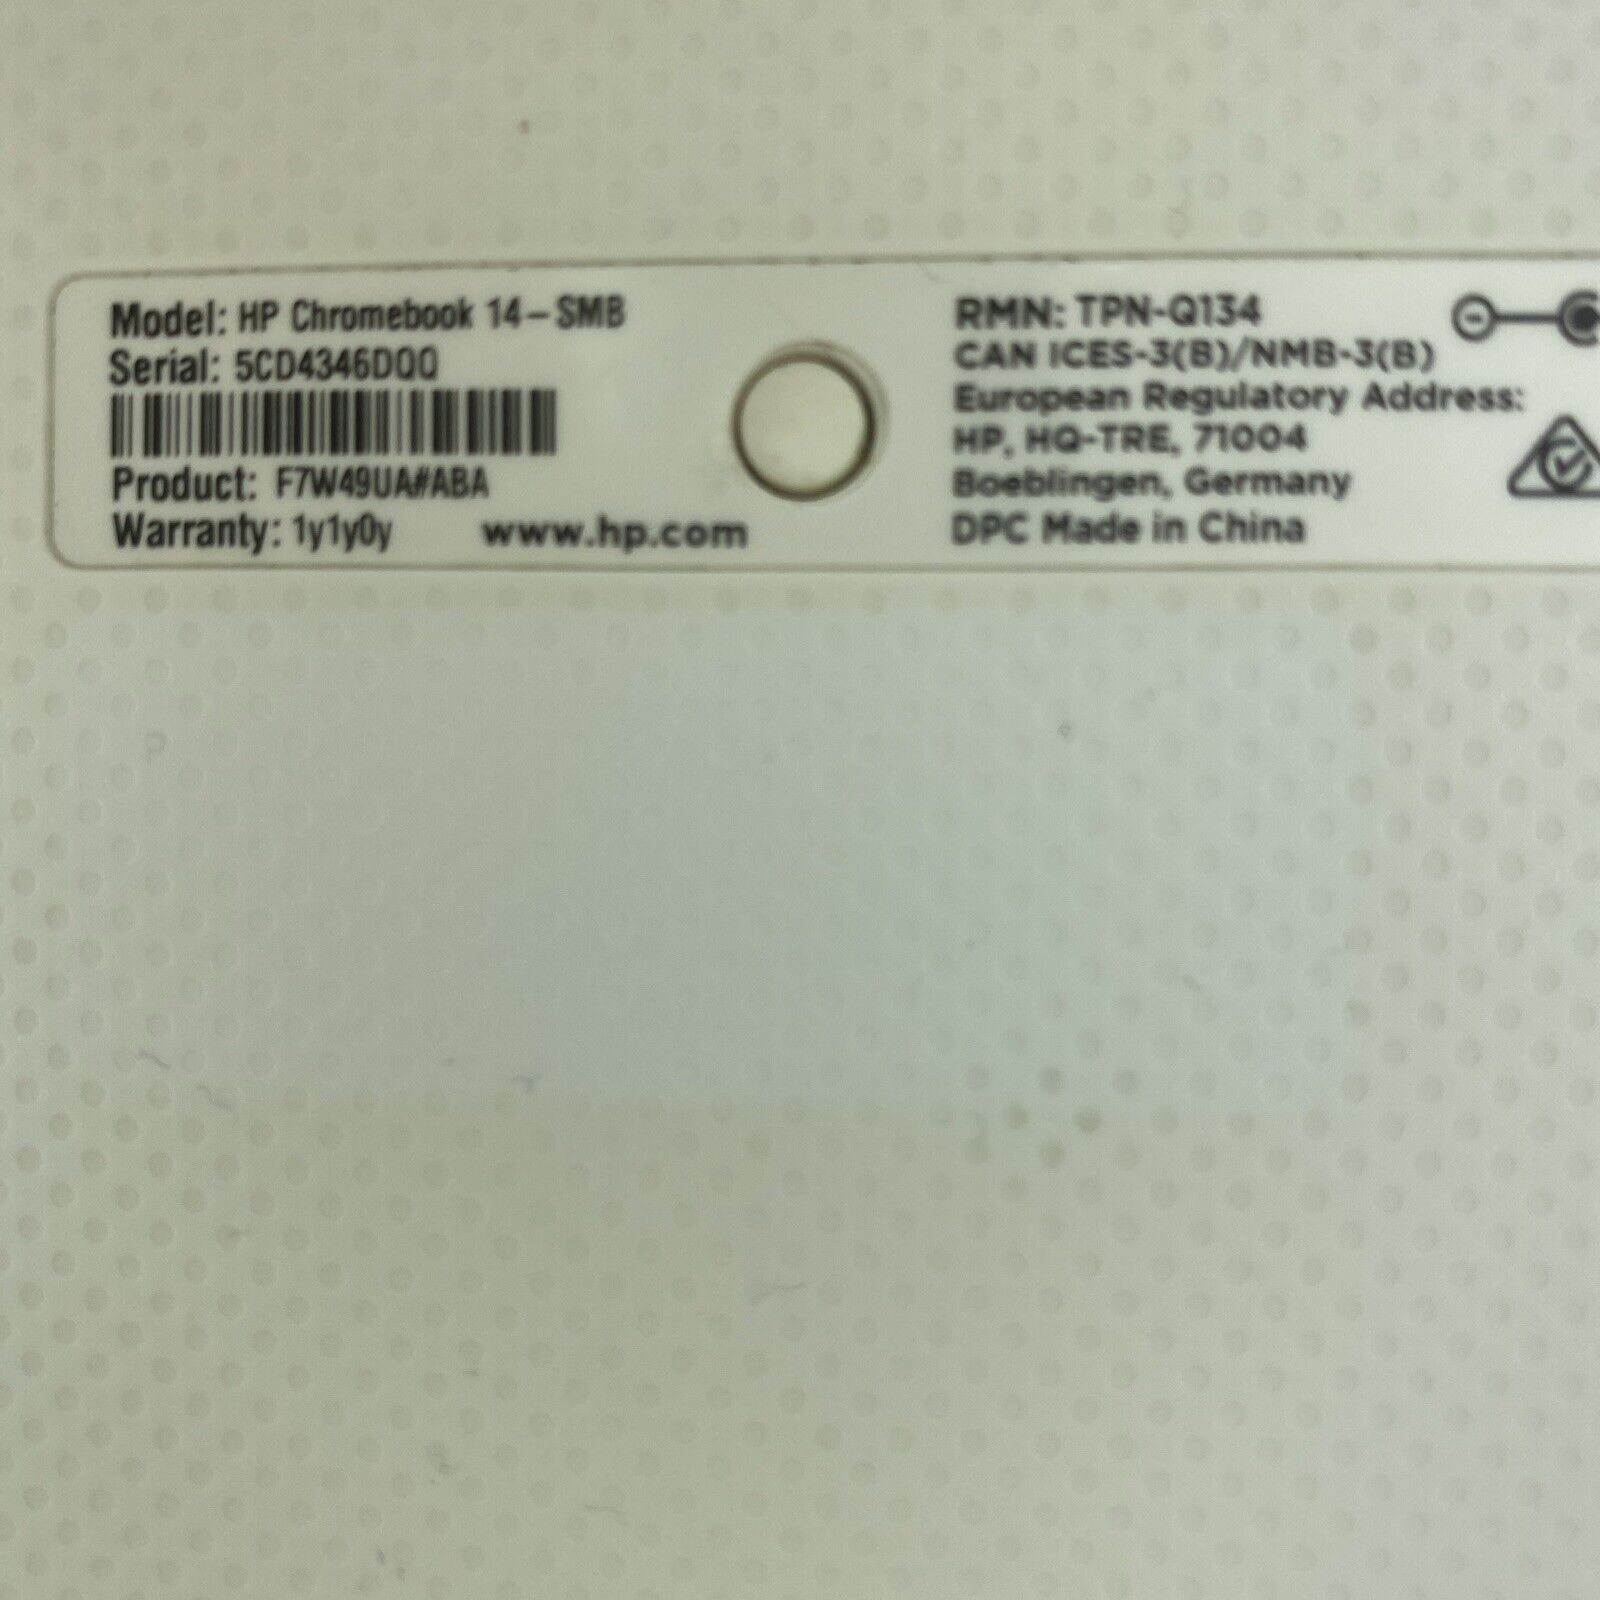 HP ChromeBook 14-SMB Intel Celeron 2955U 1.40GHz 4GB RAM 16GB eMMC AC Adapter